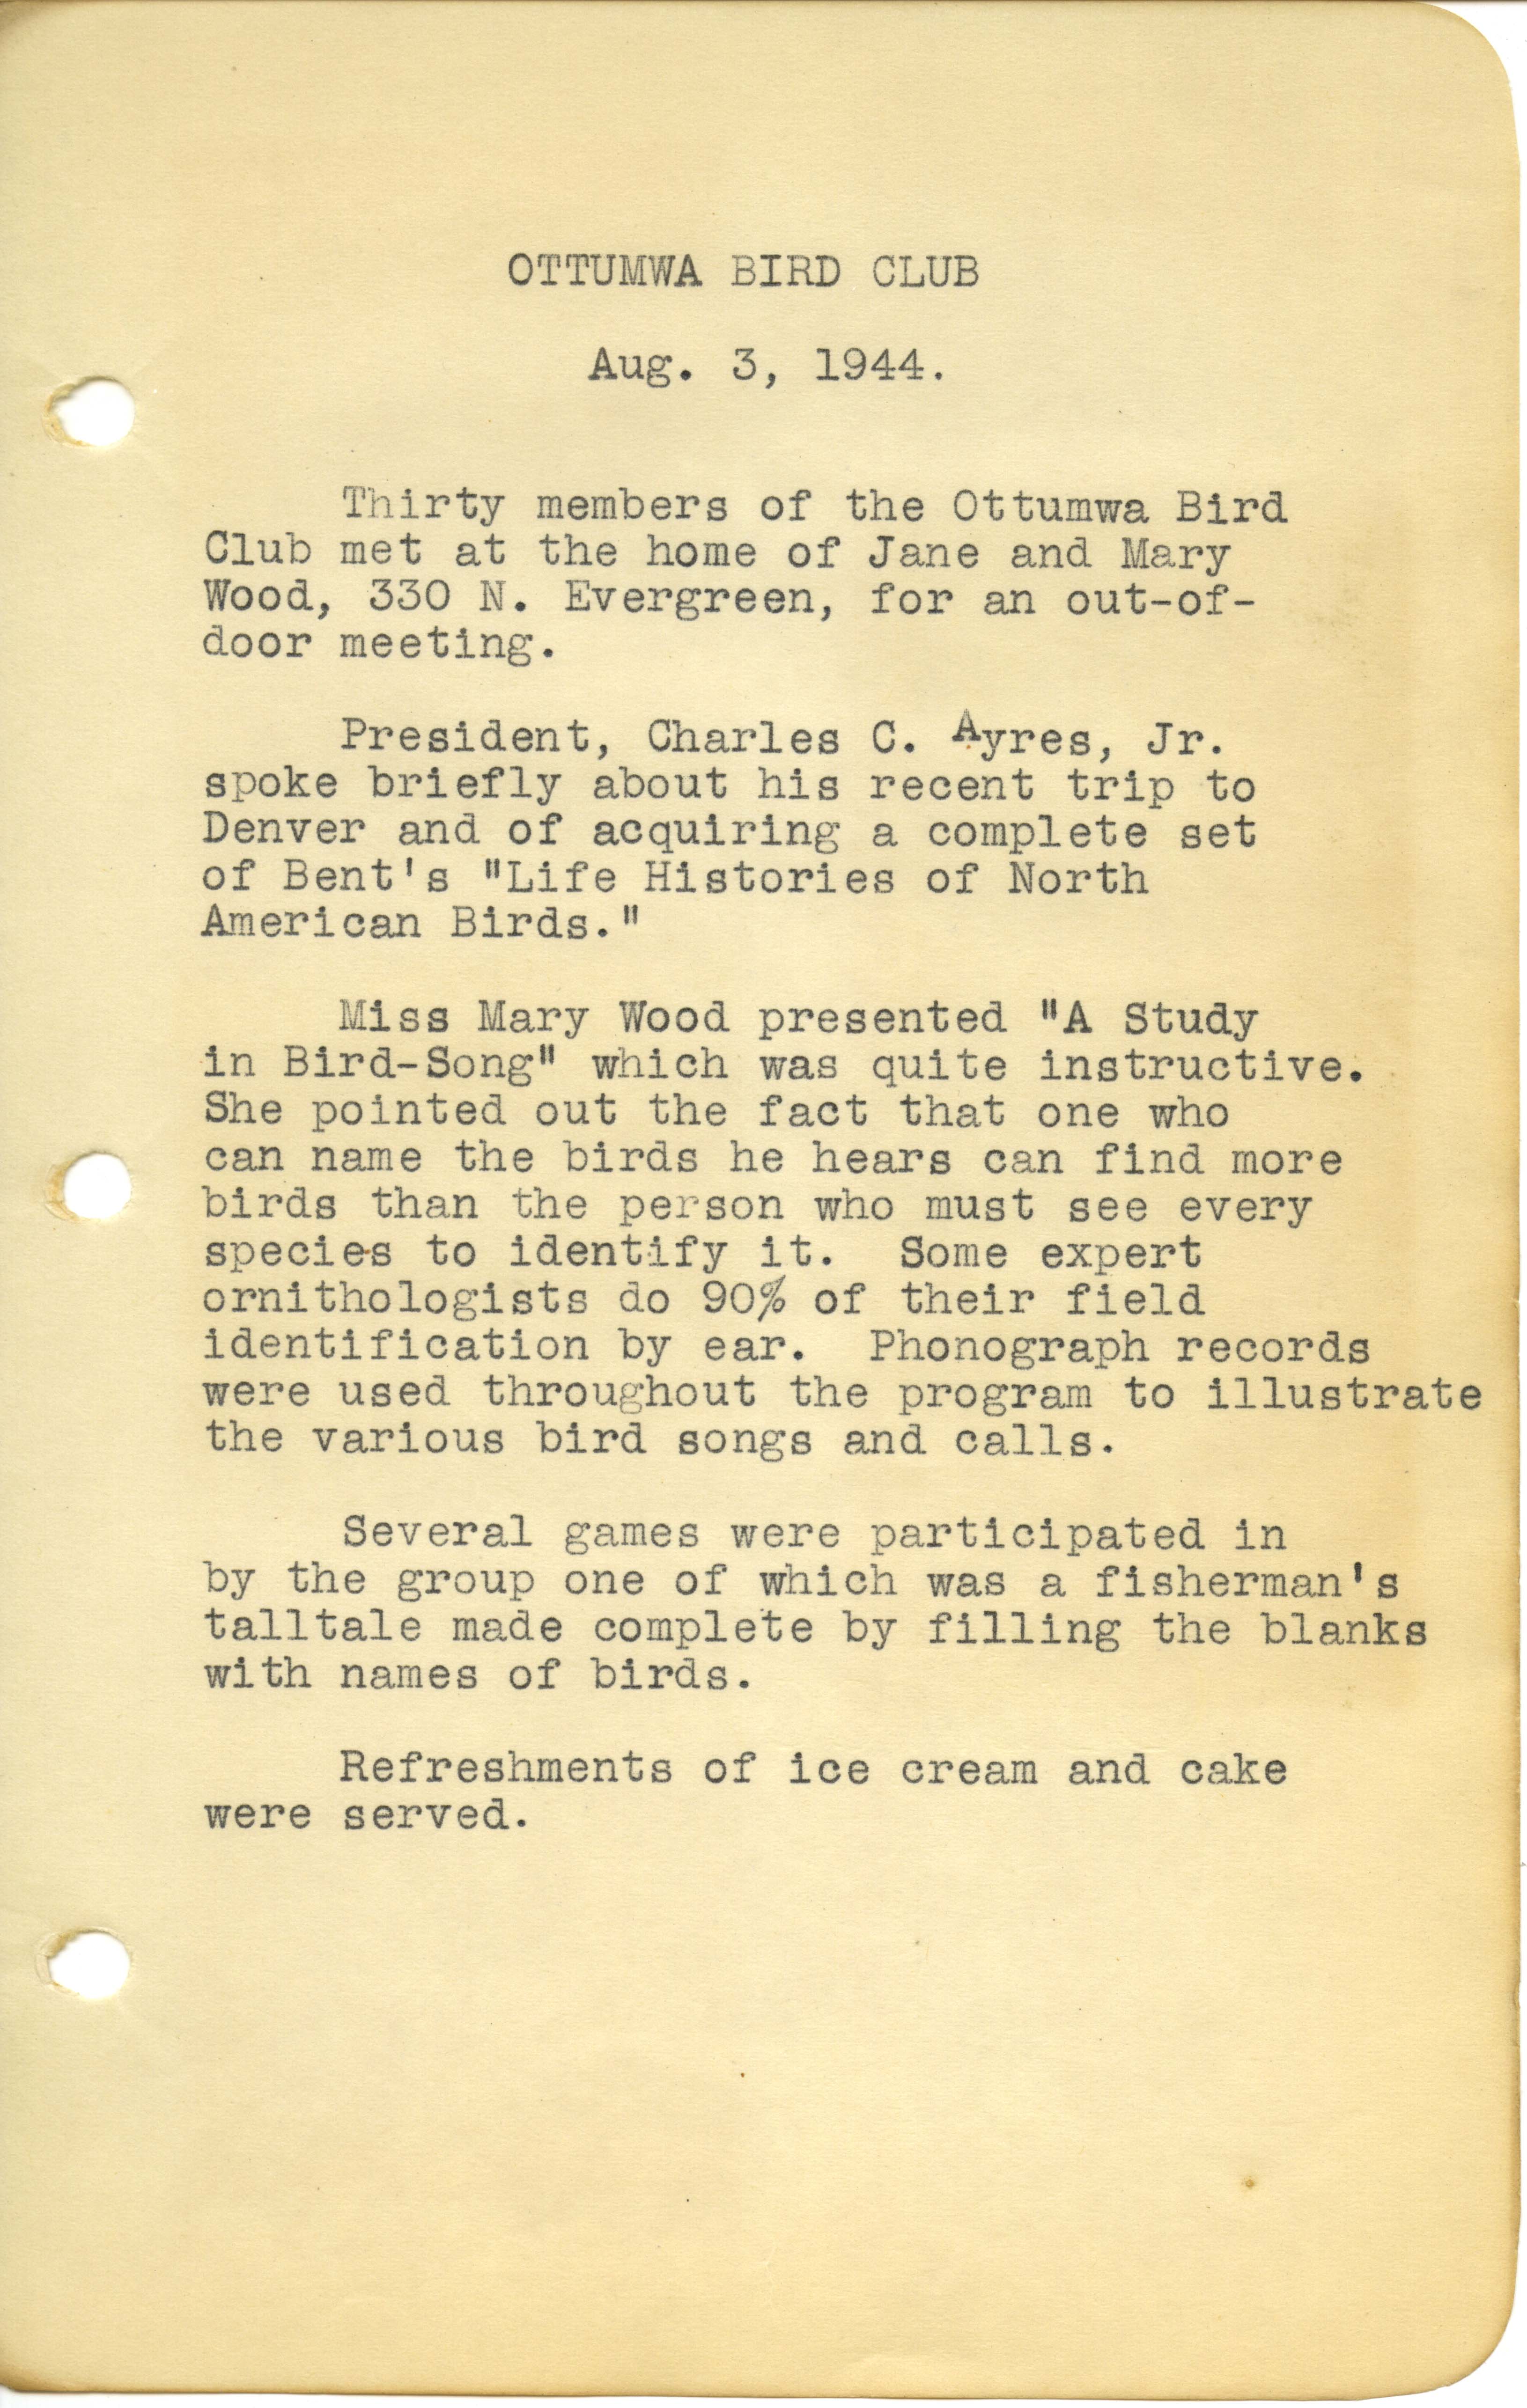  Ottumwa Bird Club meeting minutes, August 3, 1944